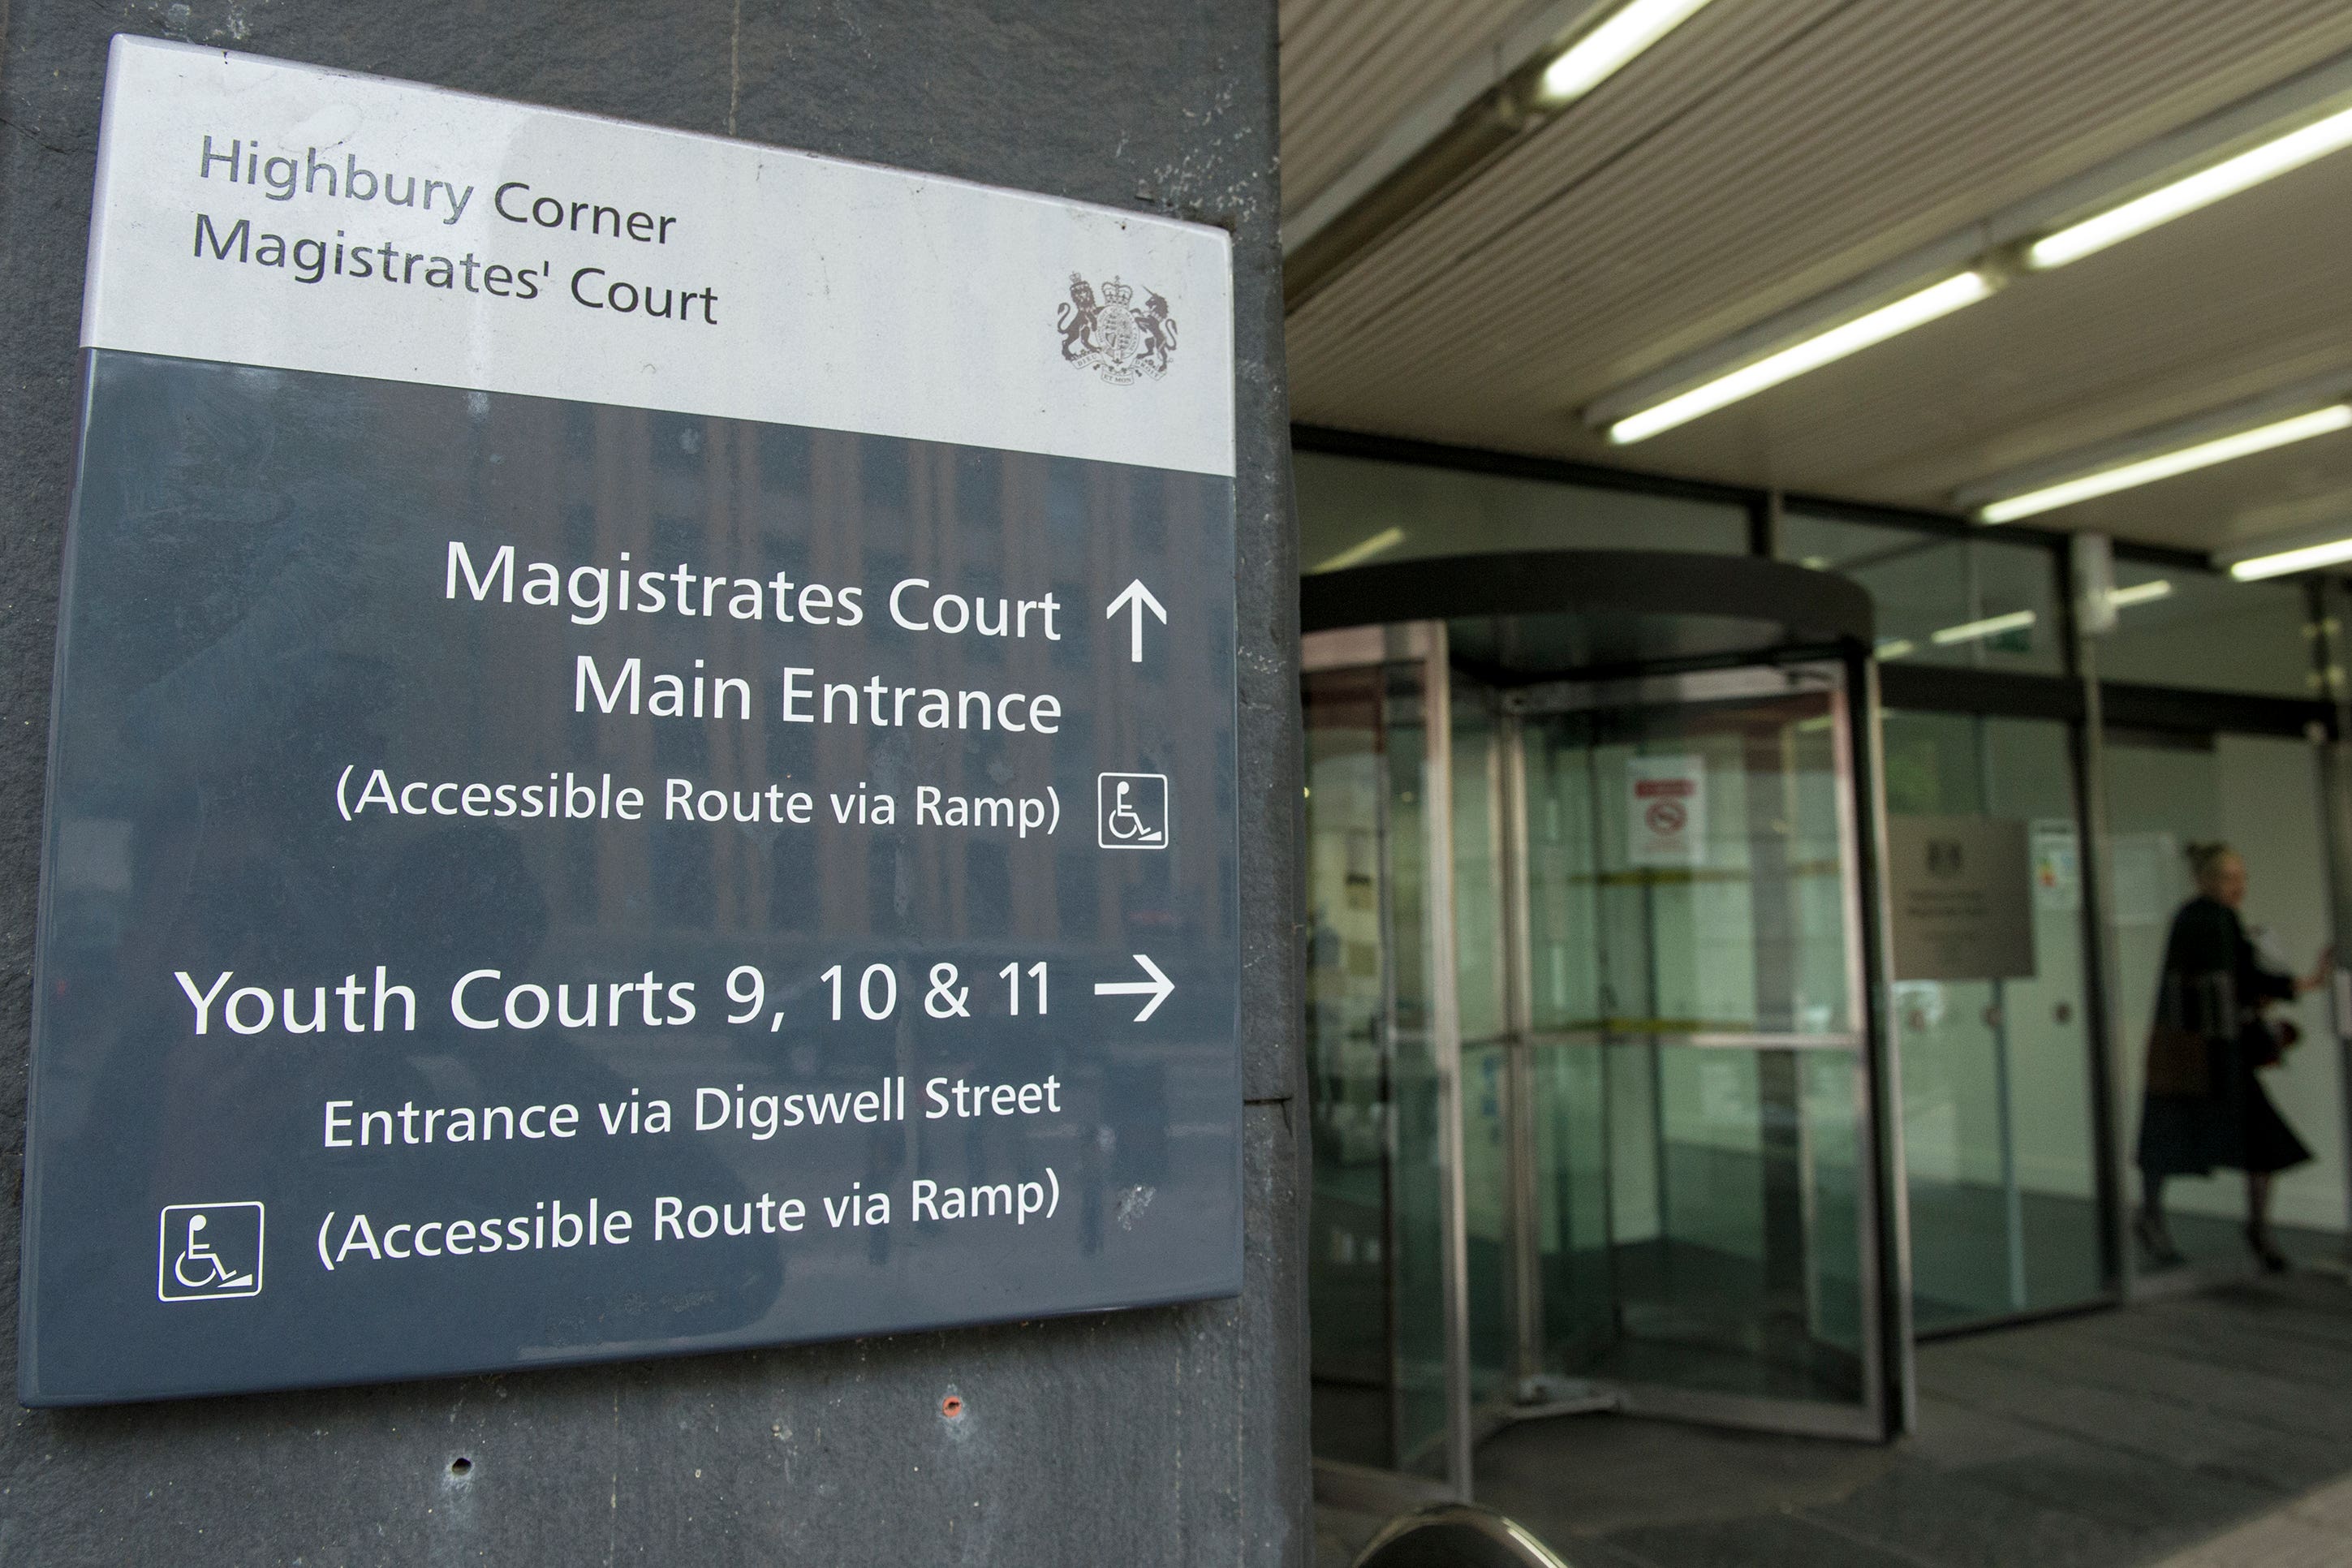 Darren Hughes was sentenced at Highbury Corner Magistrates Court